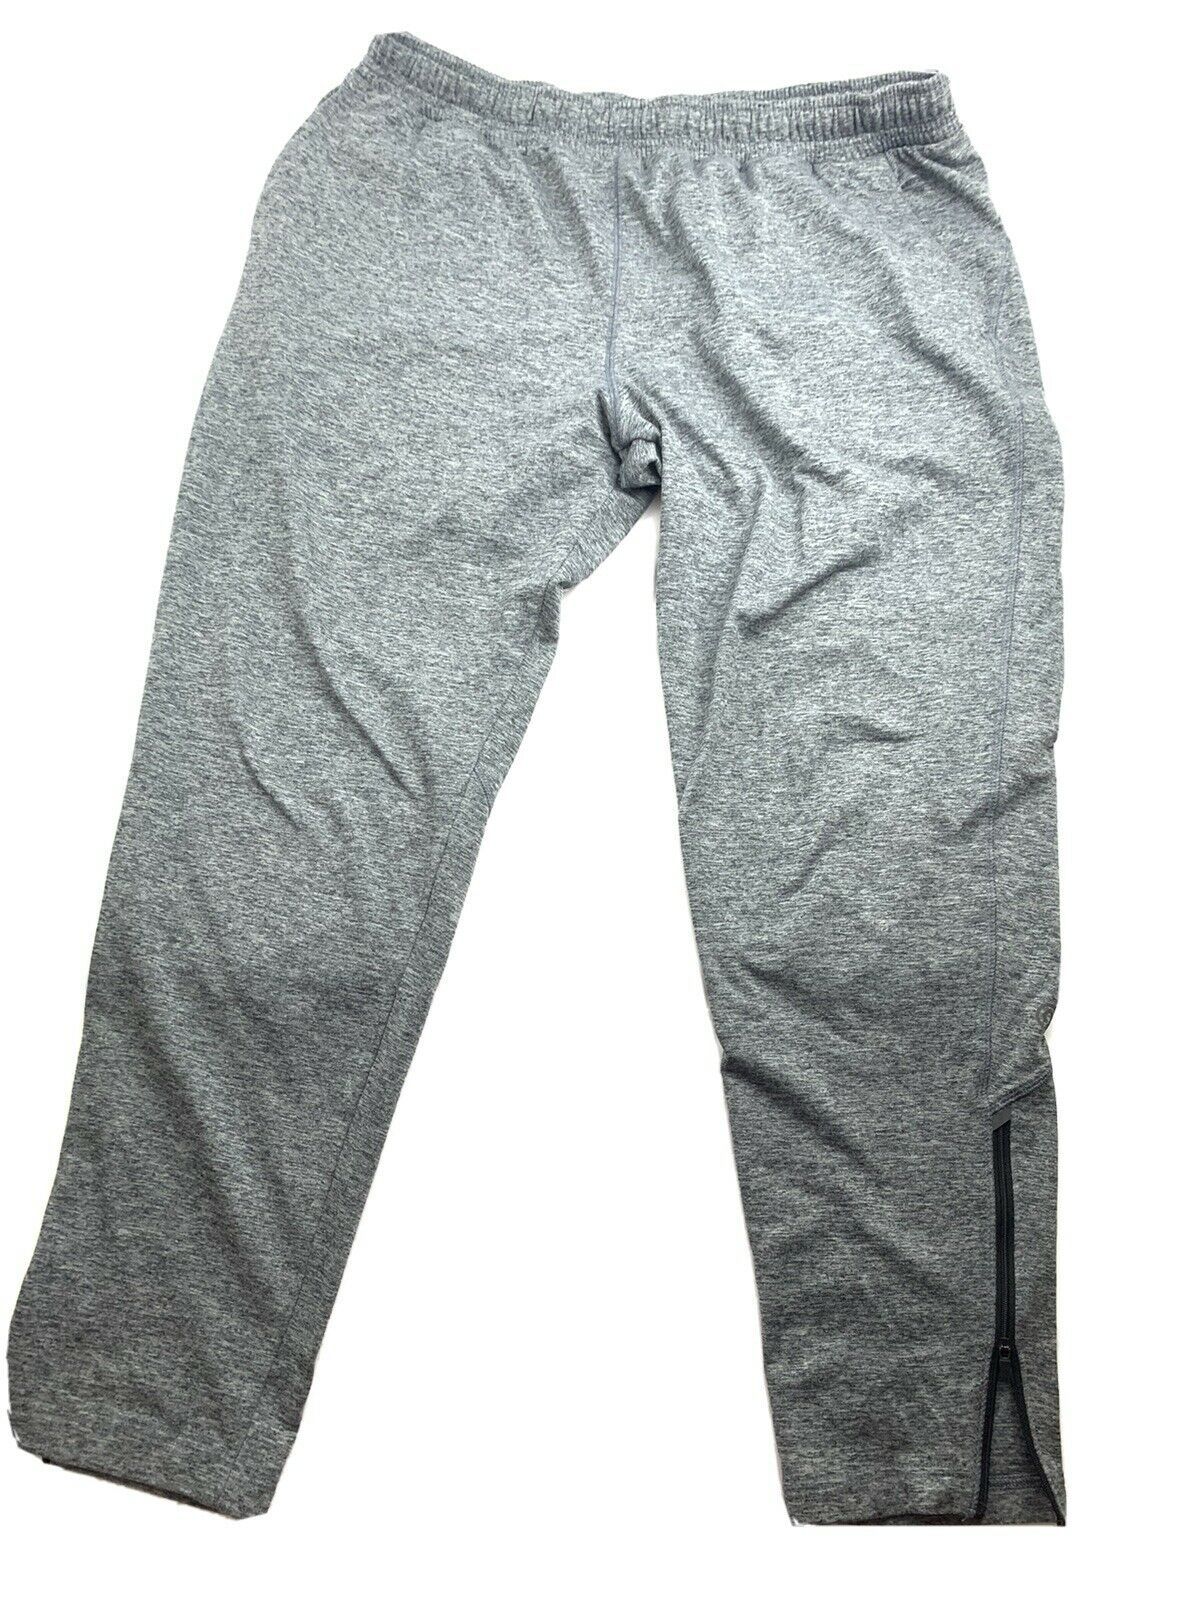 Champion Mens sweat pants XL Gray Zip Ankle Elastic Waist Pockets ...